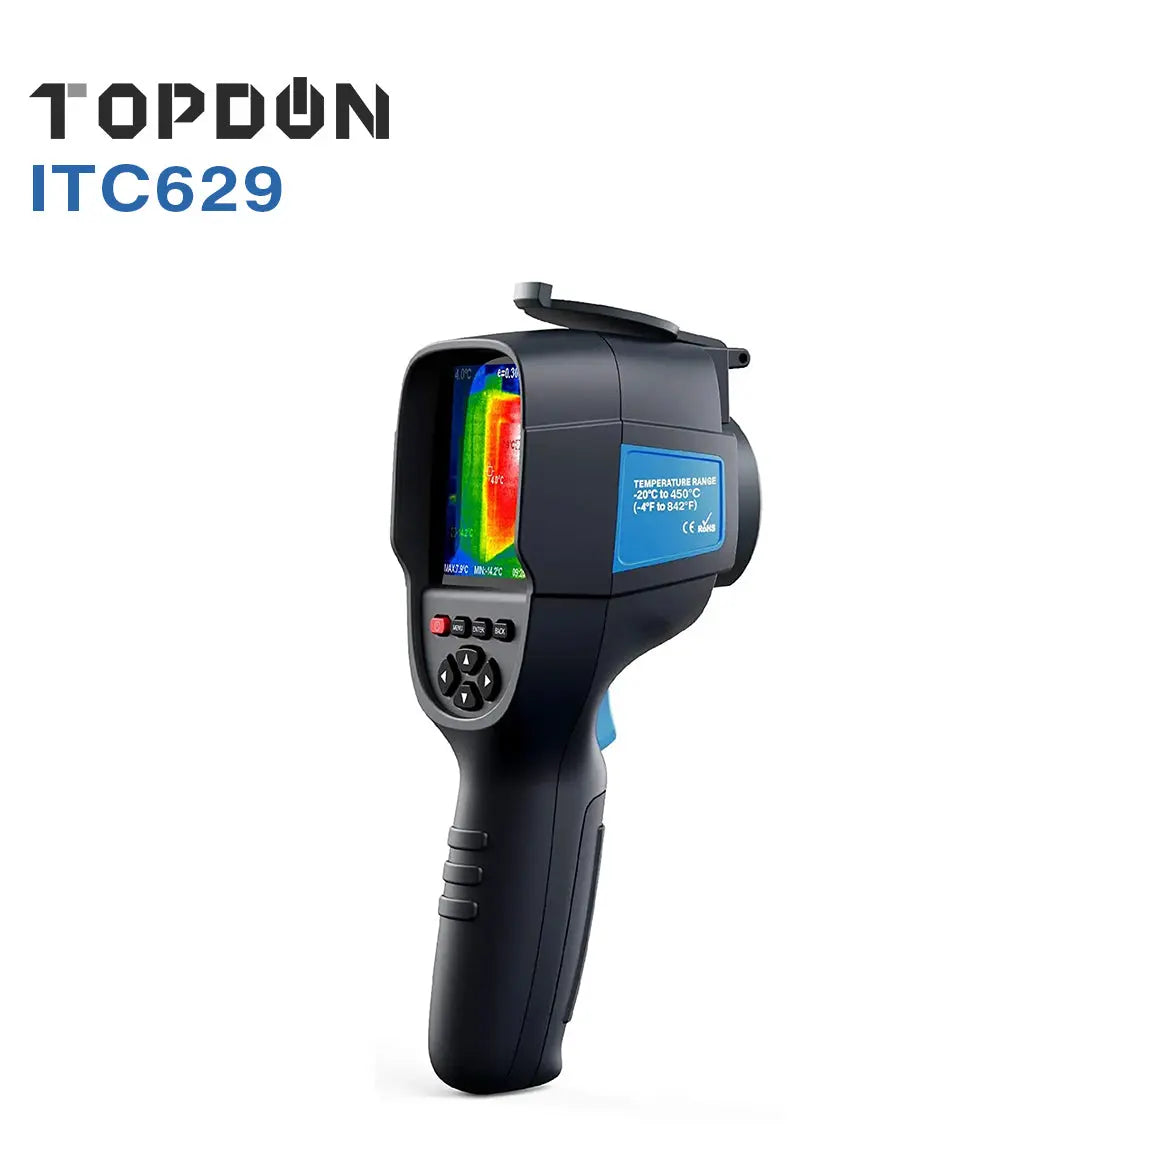 Topdon ITC629 Handheld Pocket Professional Thermal Infrared Camera Topdon